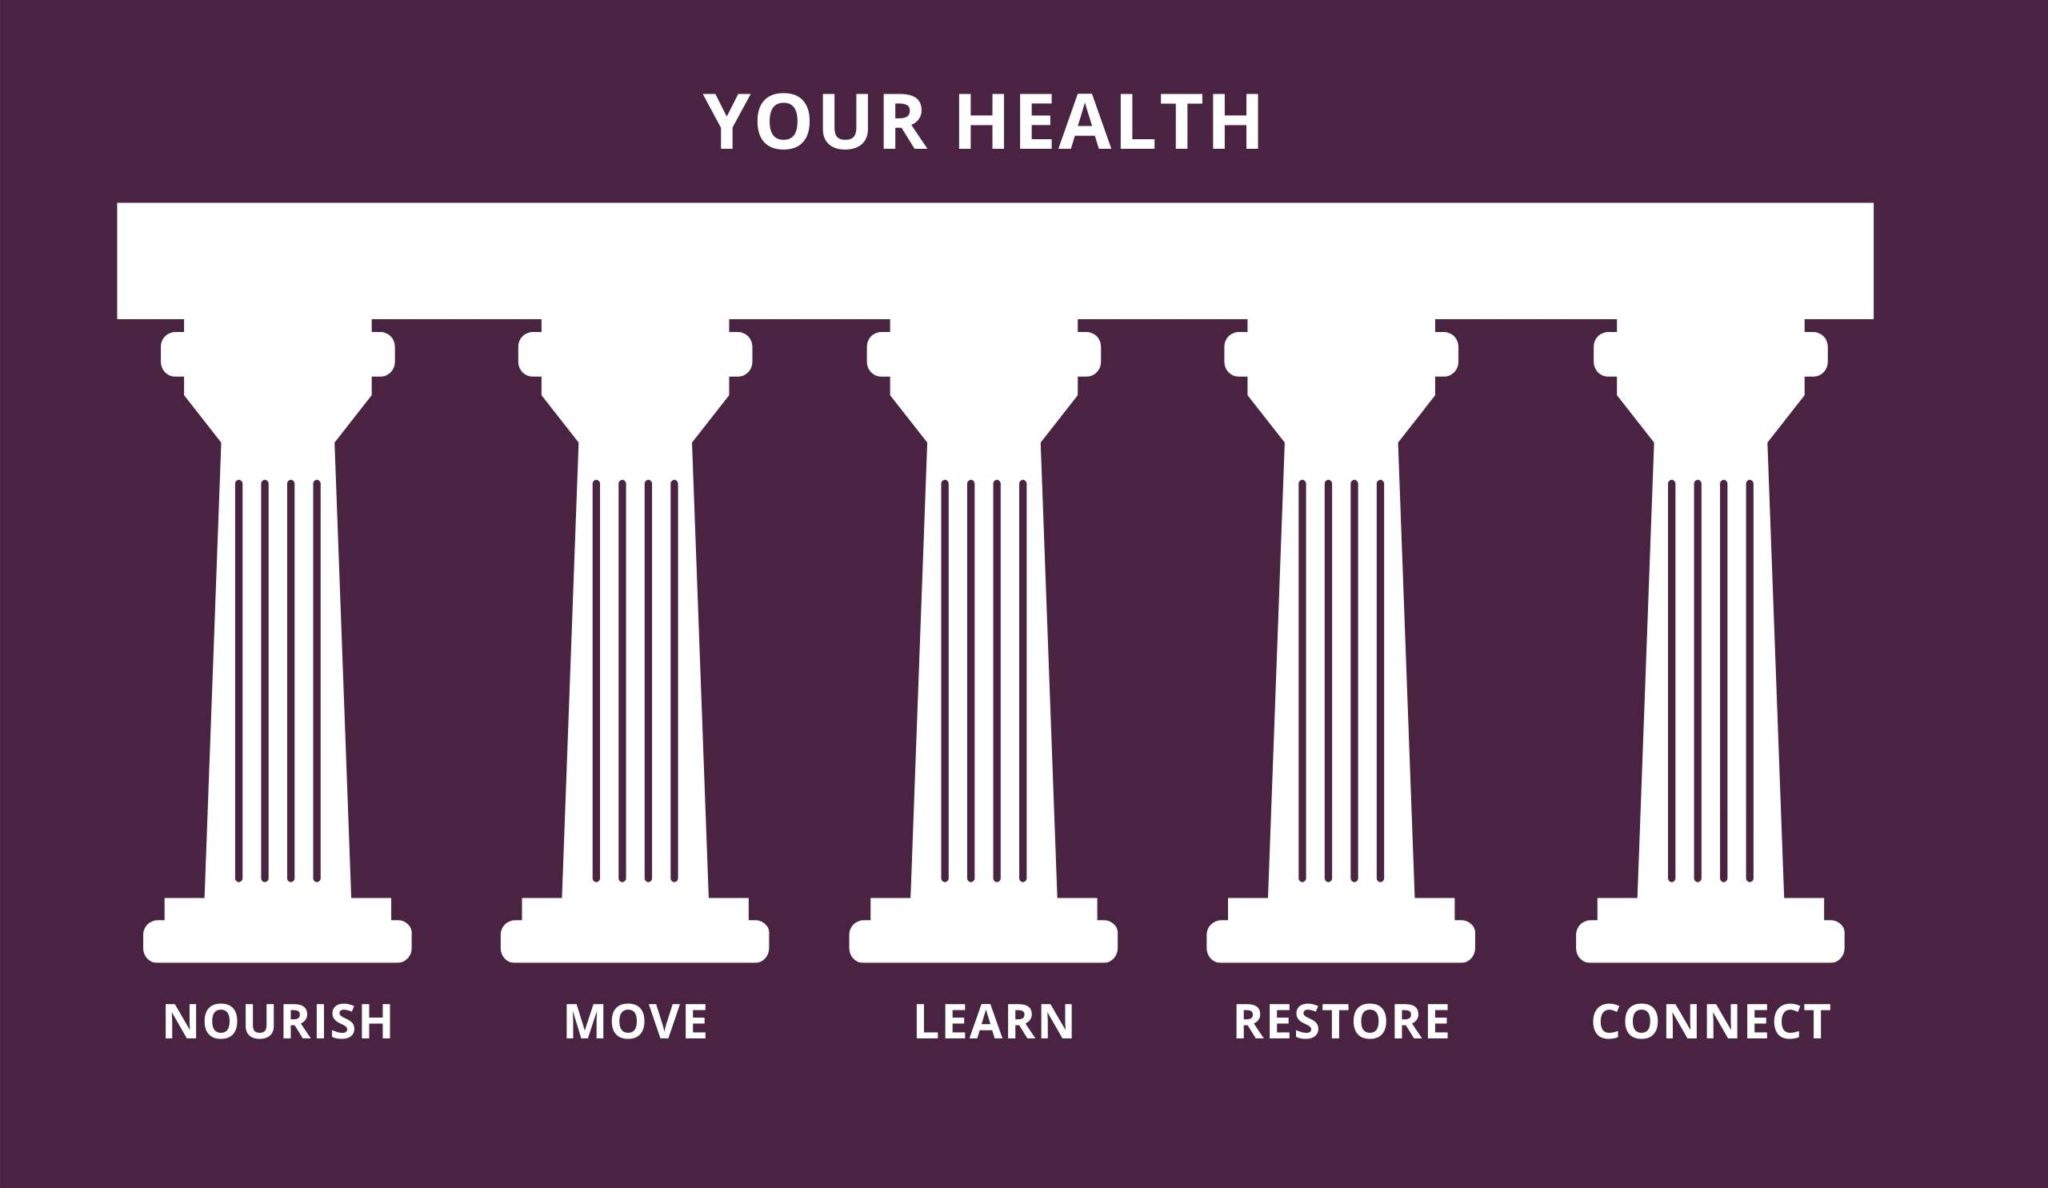 The New Healthy 5 pillar of health